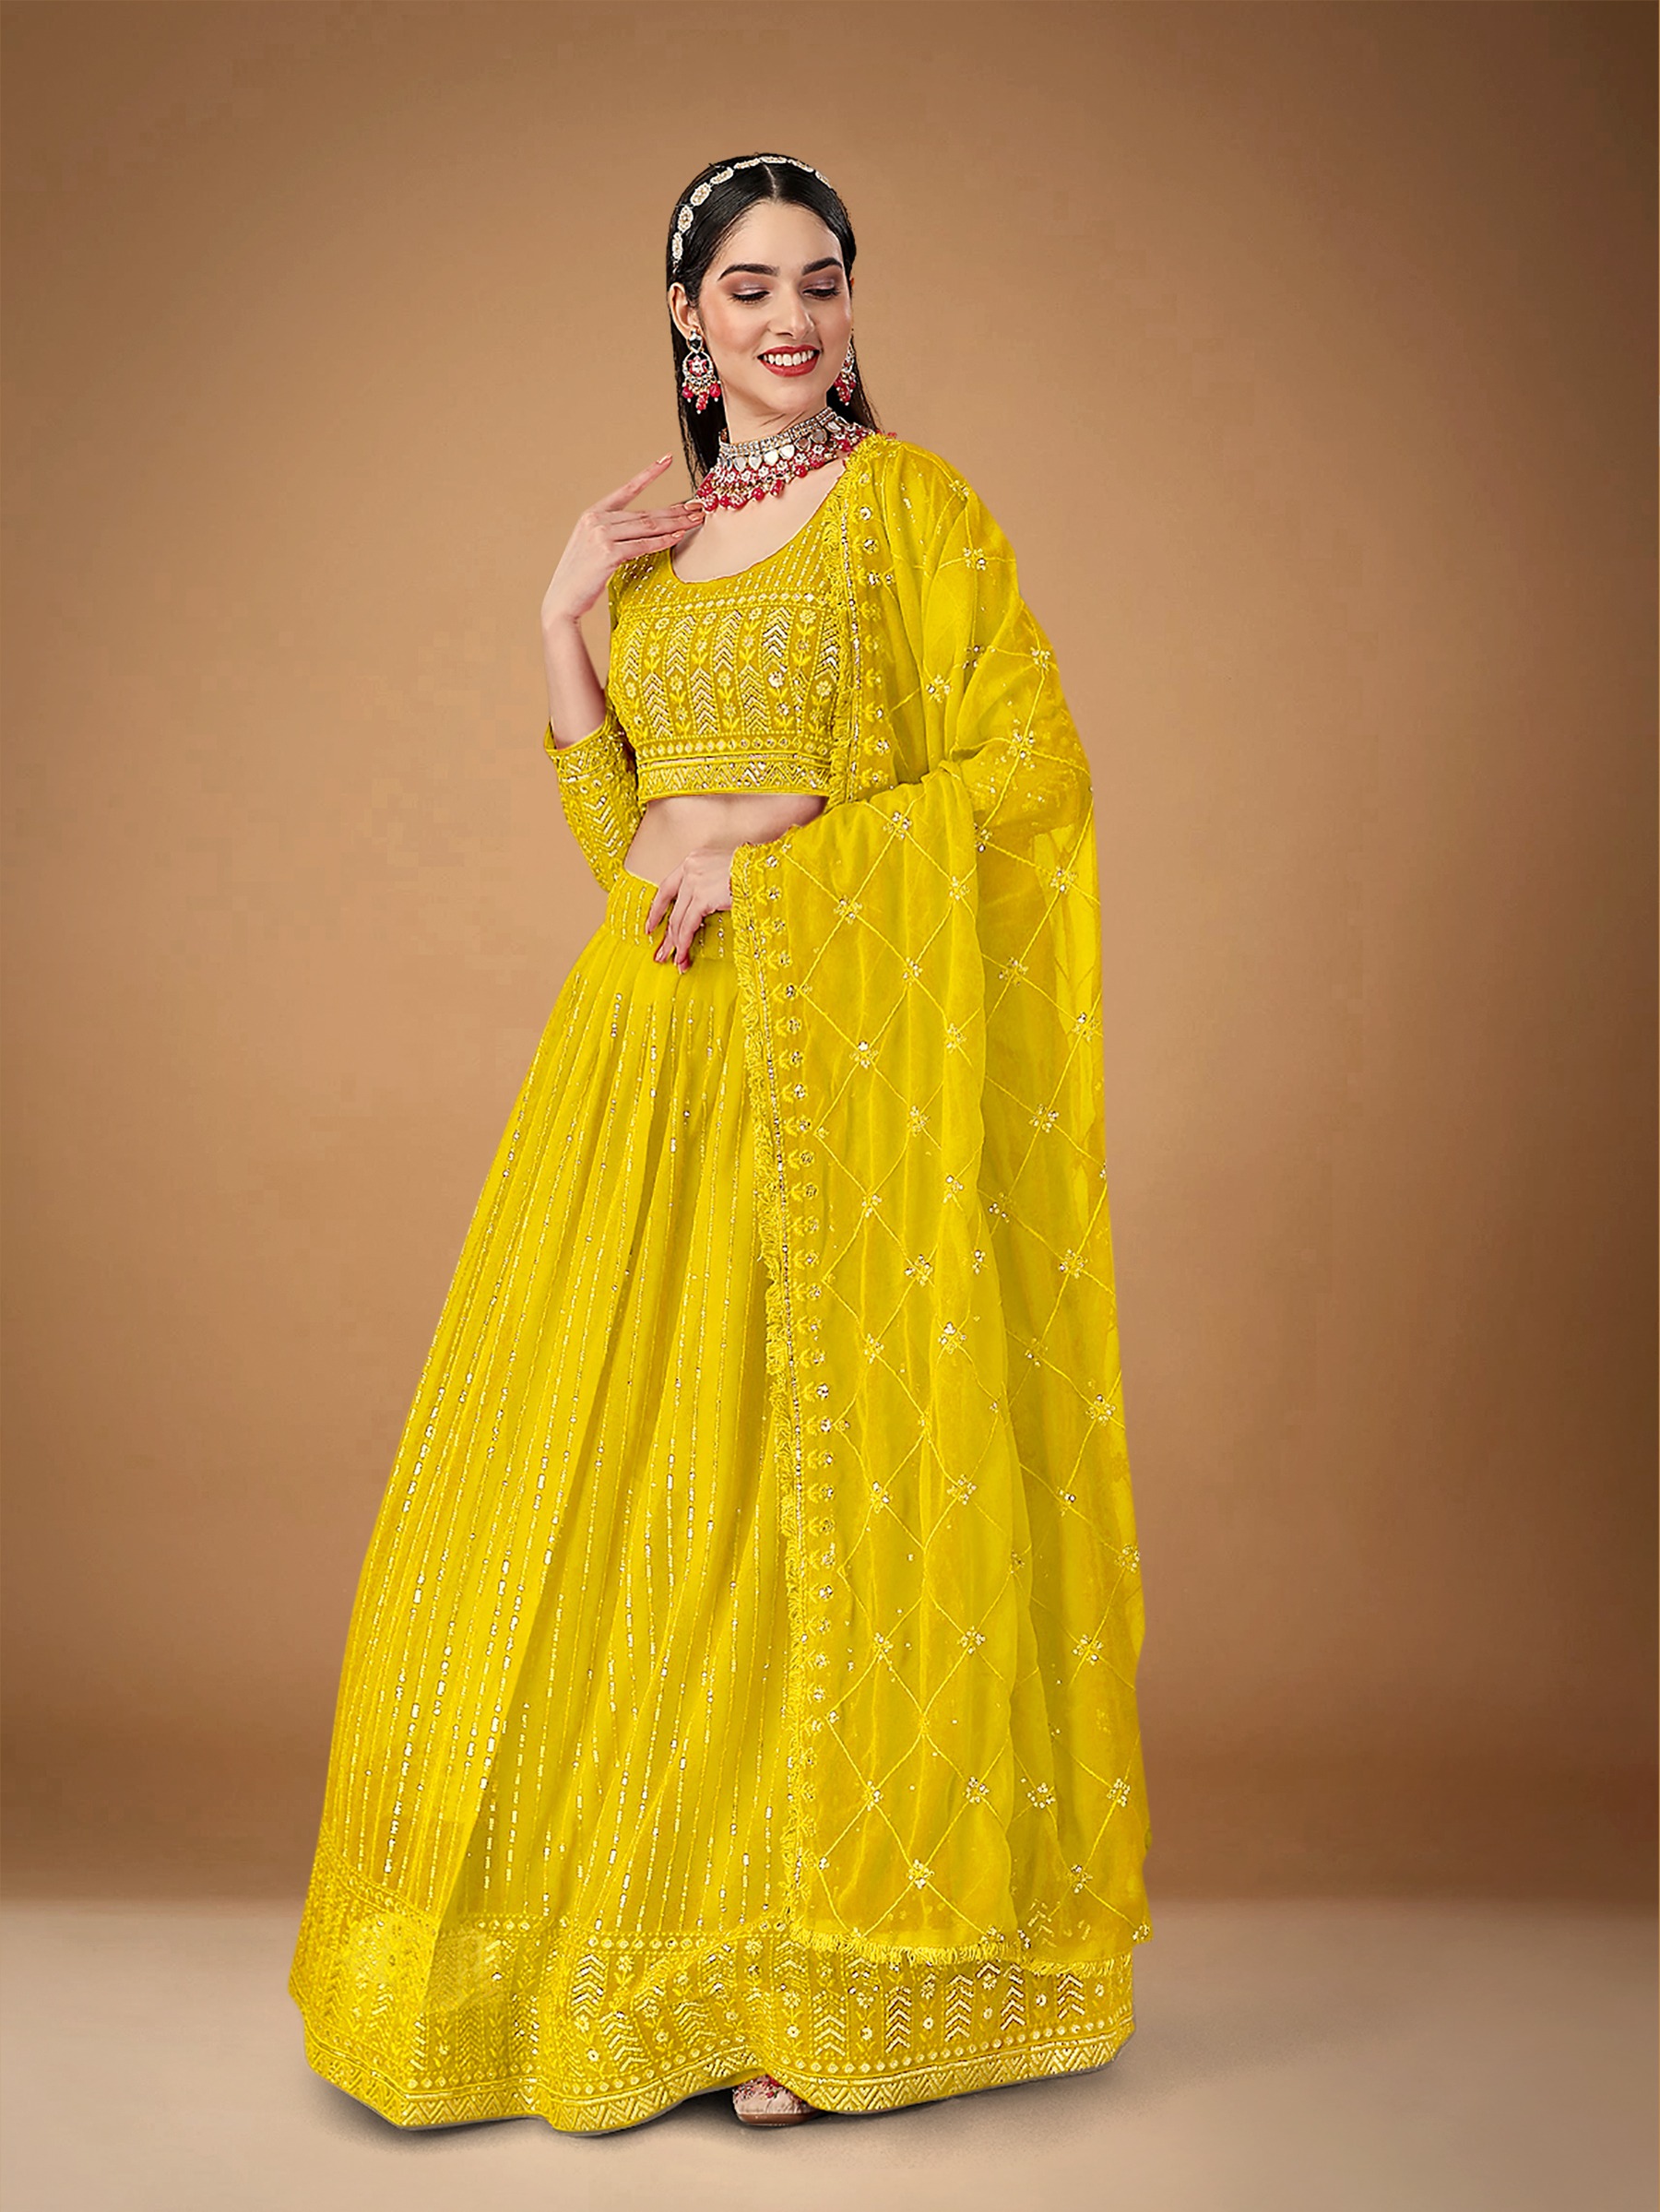 Gorgeous Trendy and Elegant Haldi Outfit Ideas! | Long blouse designs,  Lehnga designs, Indian outfits lehenga